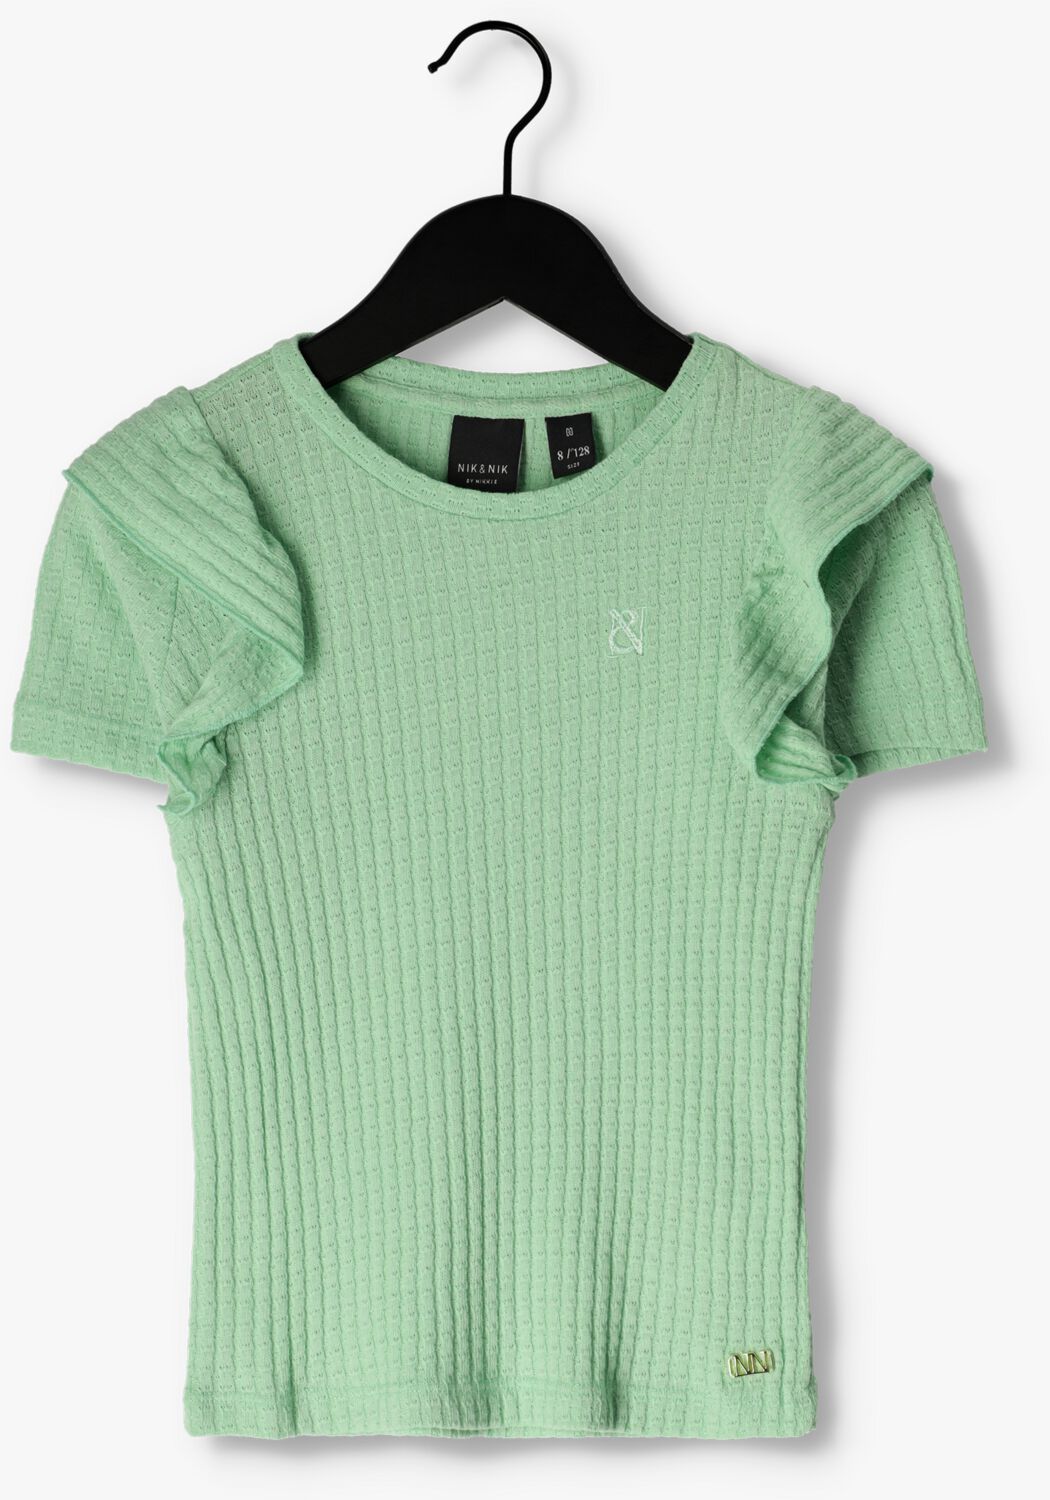 handelaar Houden pleegouders Groene NIK & NIK T-shirt CAROLINE T-SHIRT | Omoda